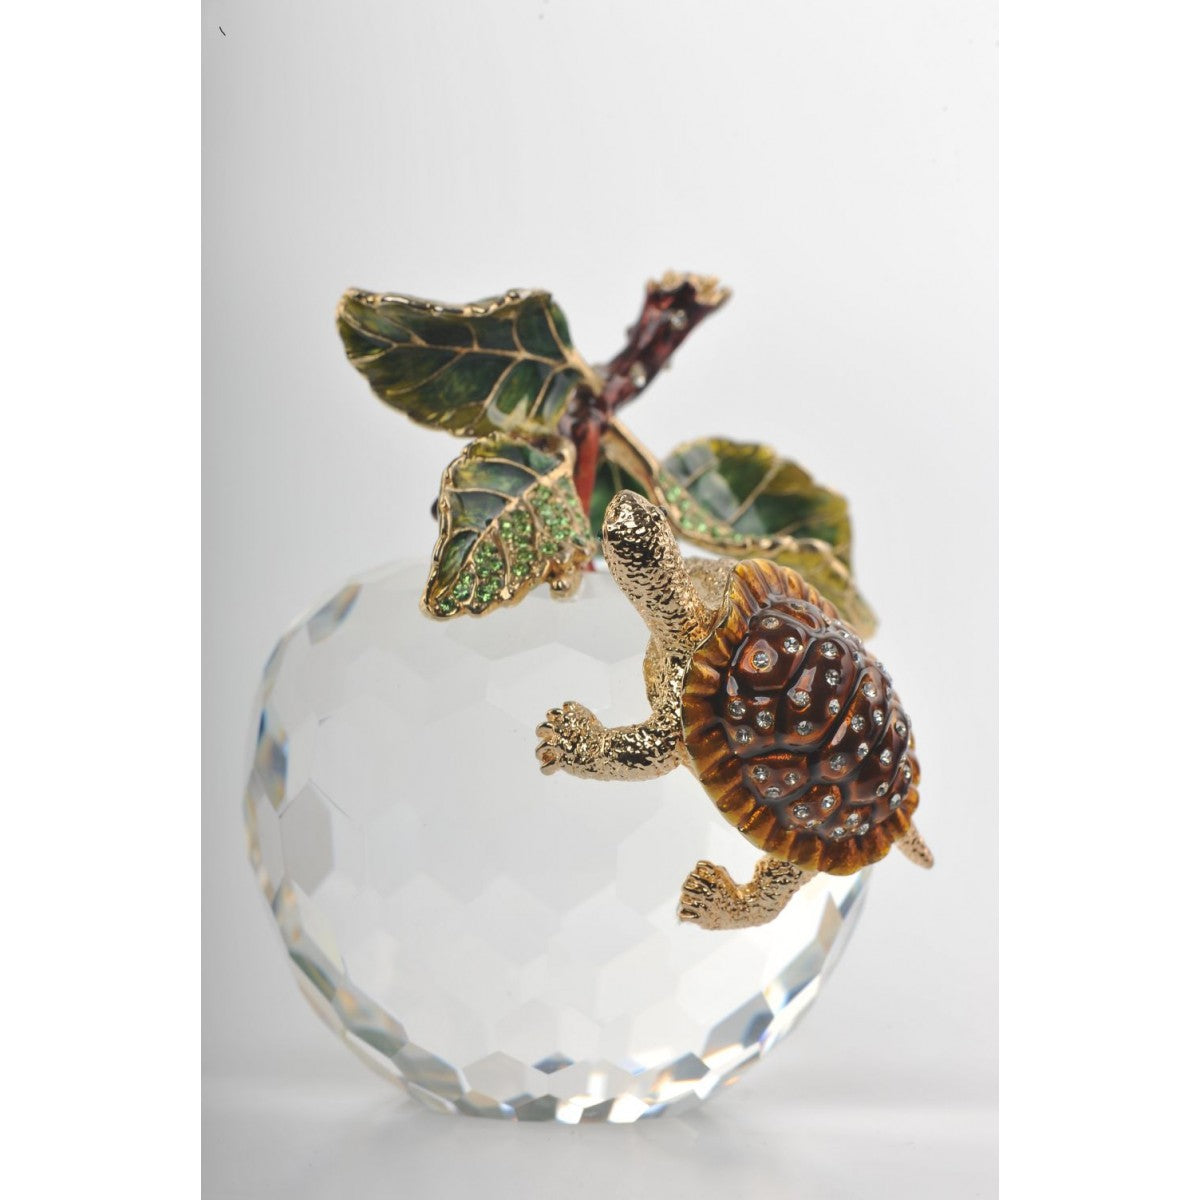 Crystal Apple with a Turtle on it Handmade by Keren Kopal 